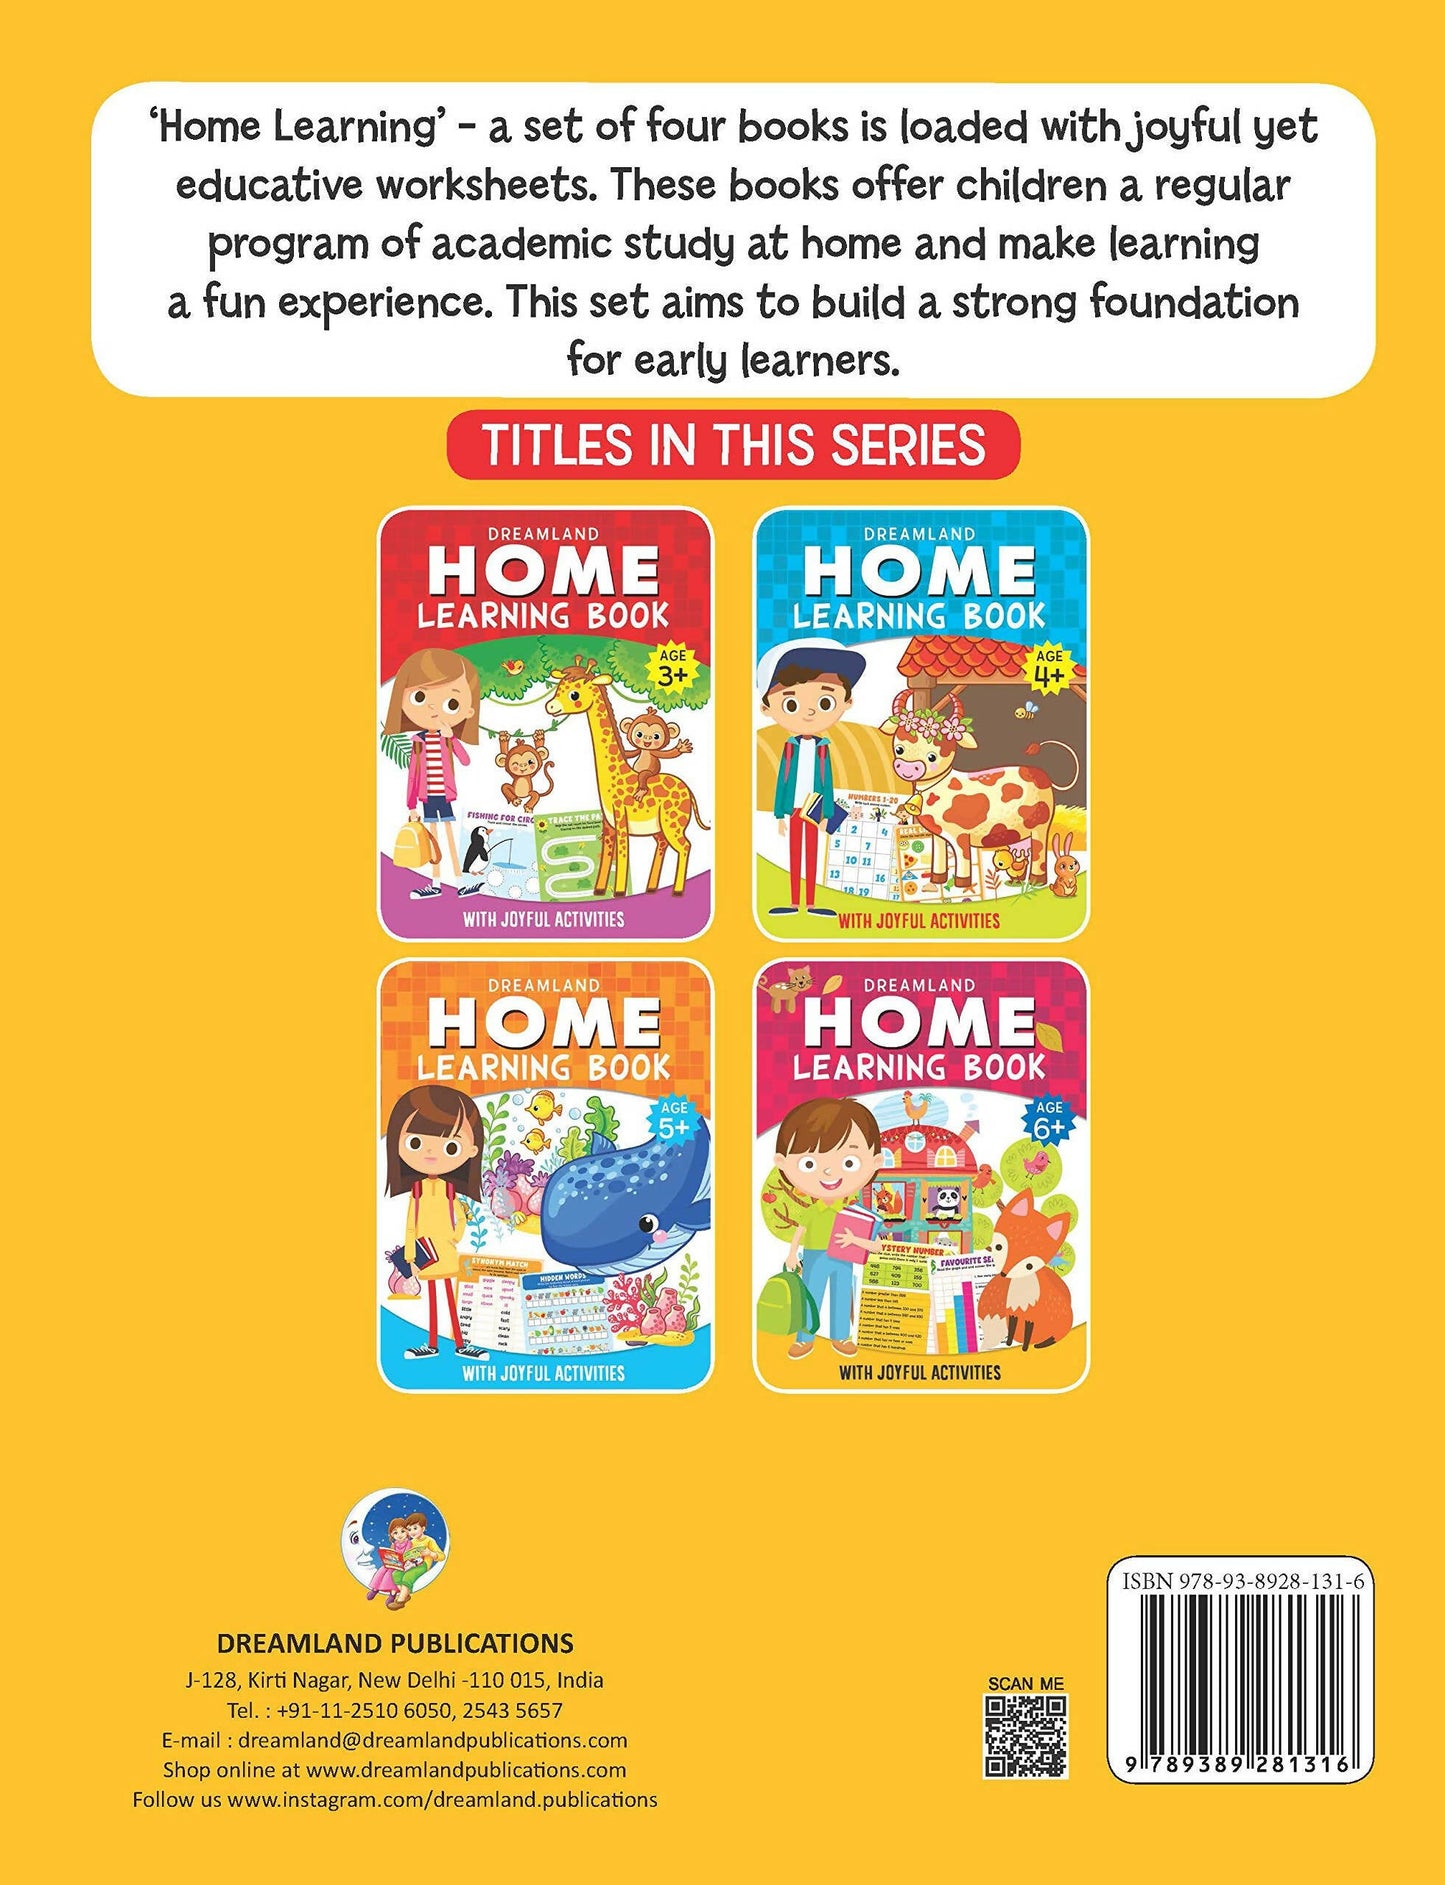 Dreamland Home Learning Book With Joyful Activities - 6+ : Children Interactive & Activity Book